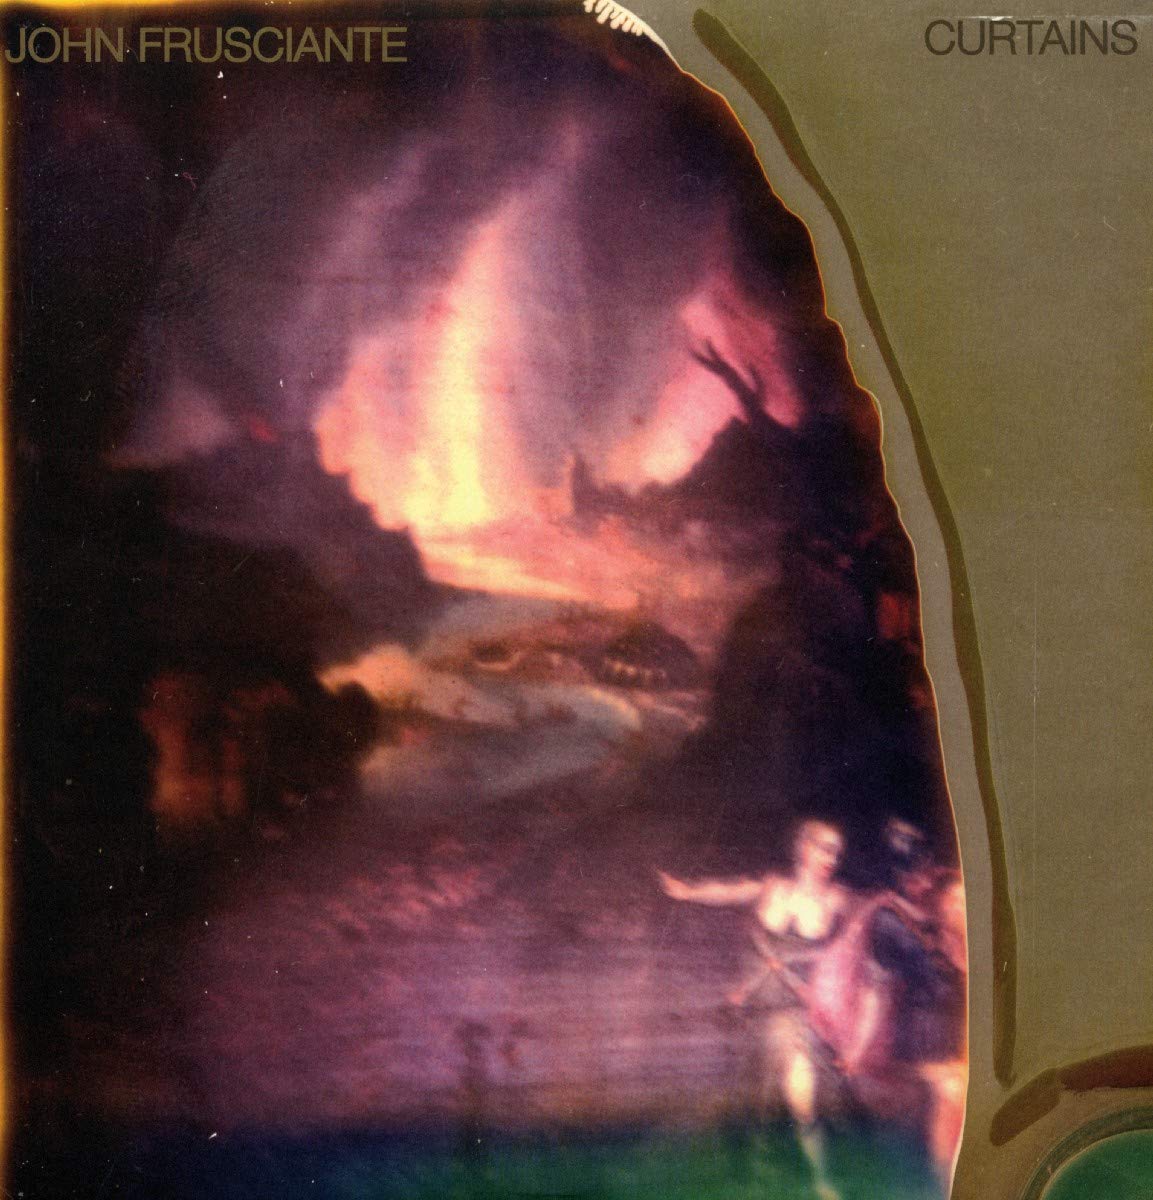 download john frusciante curtains rar